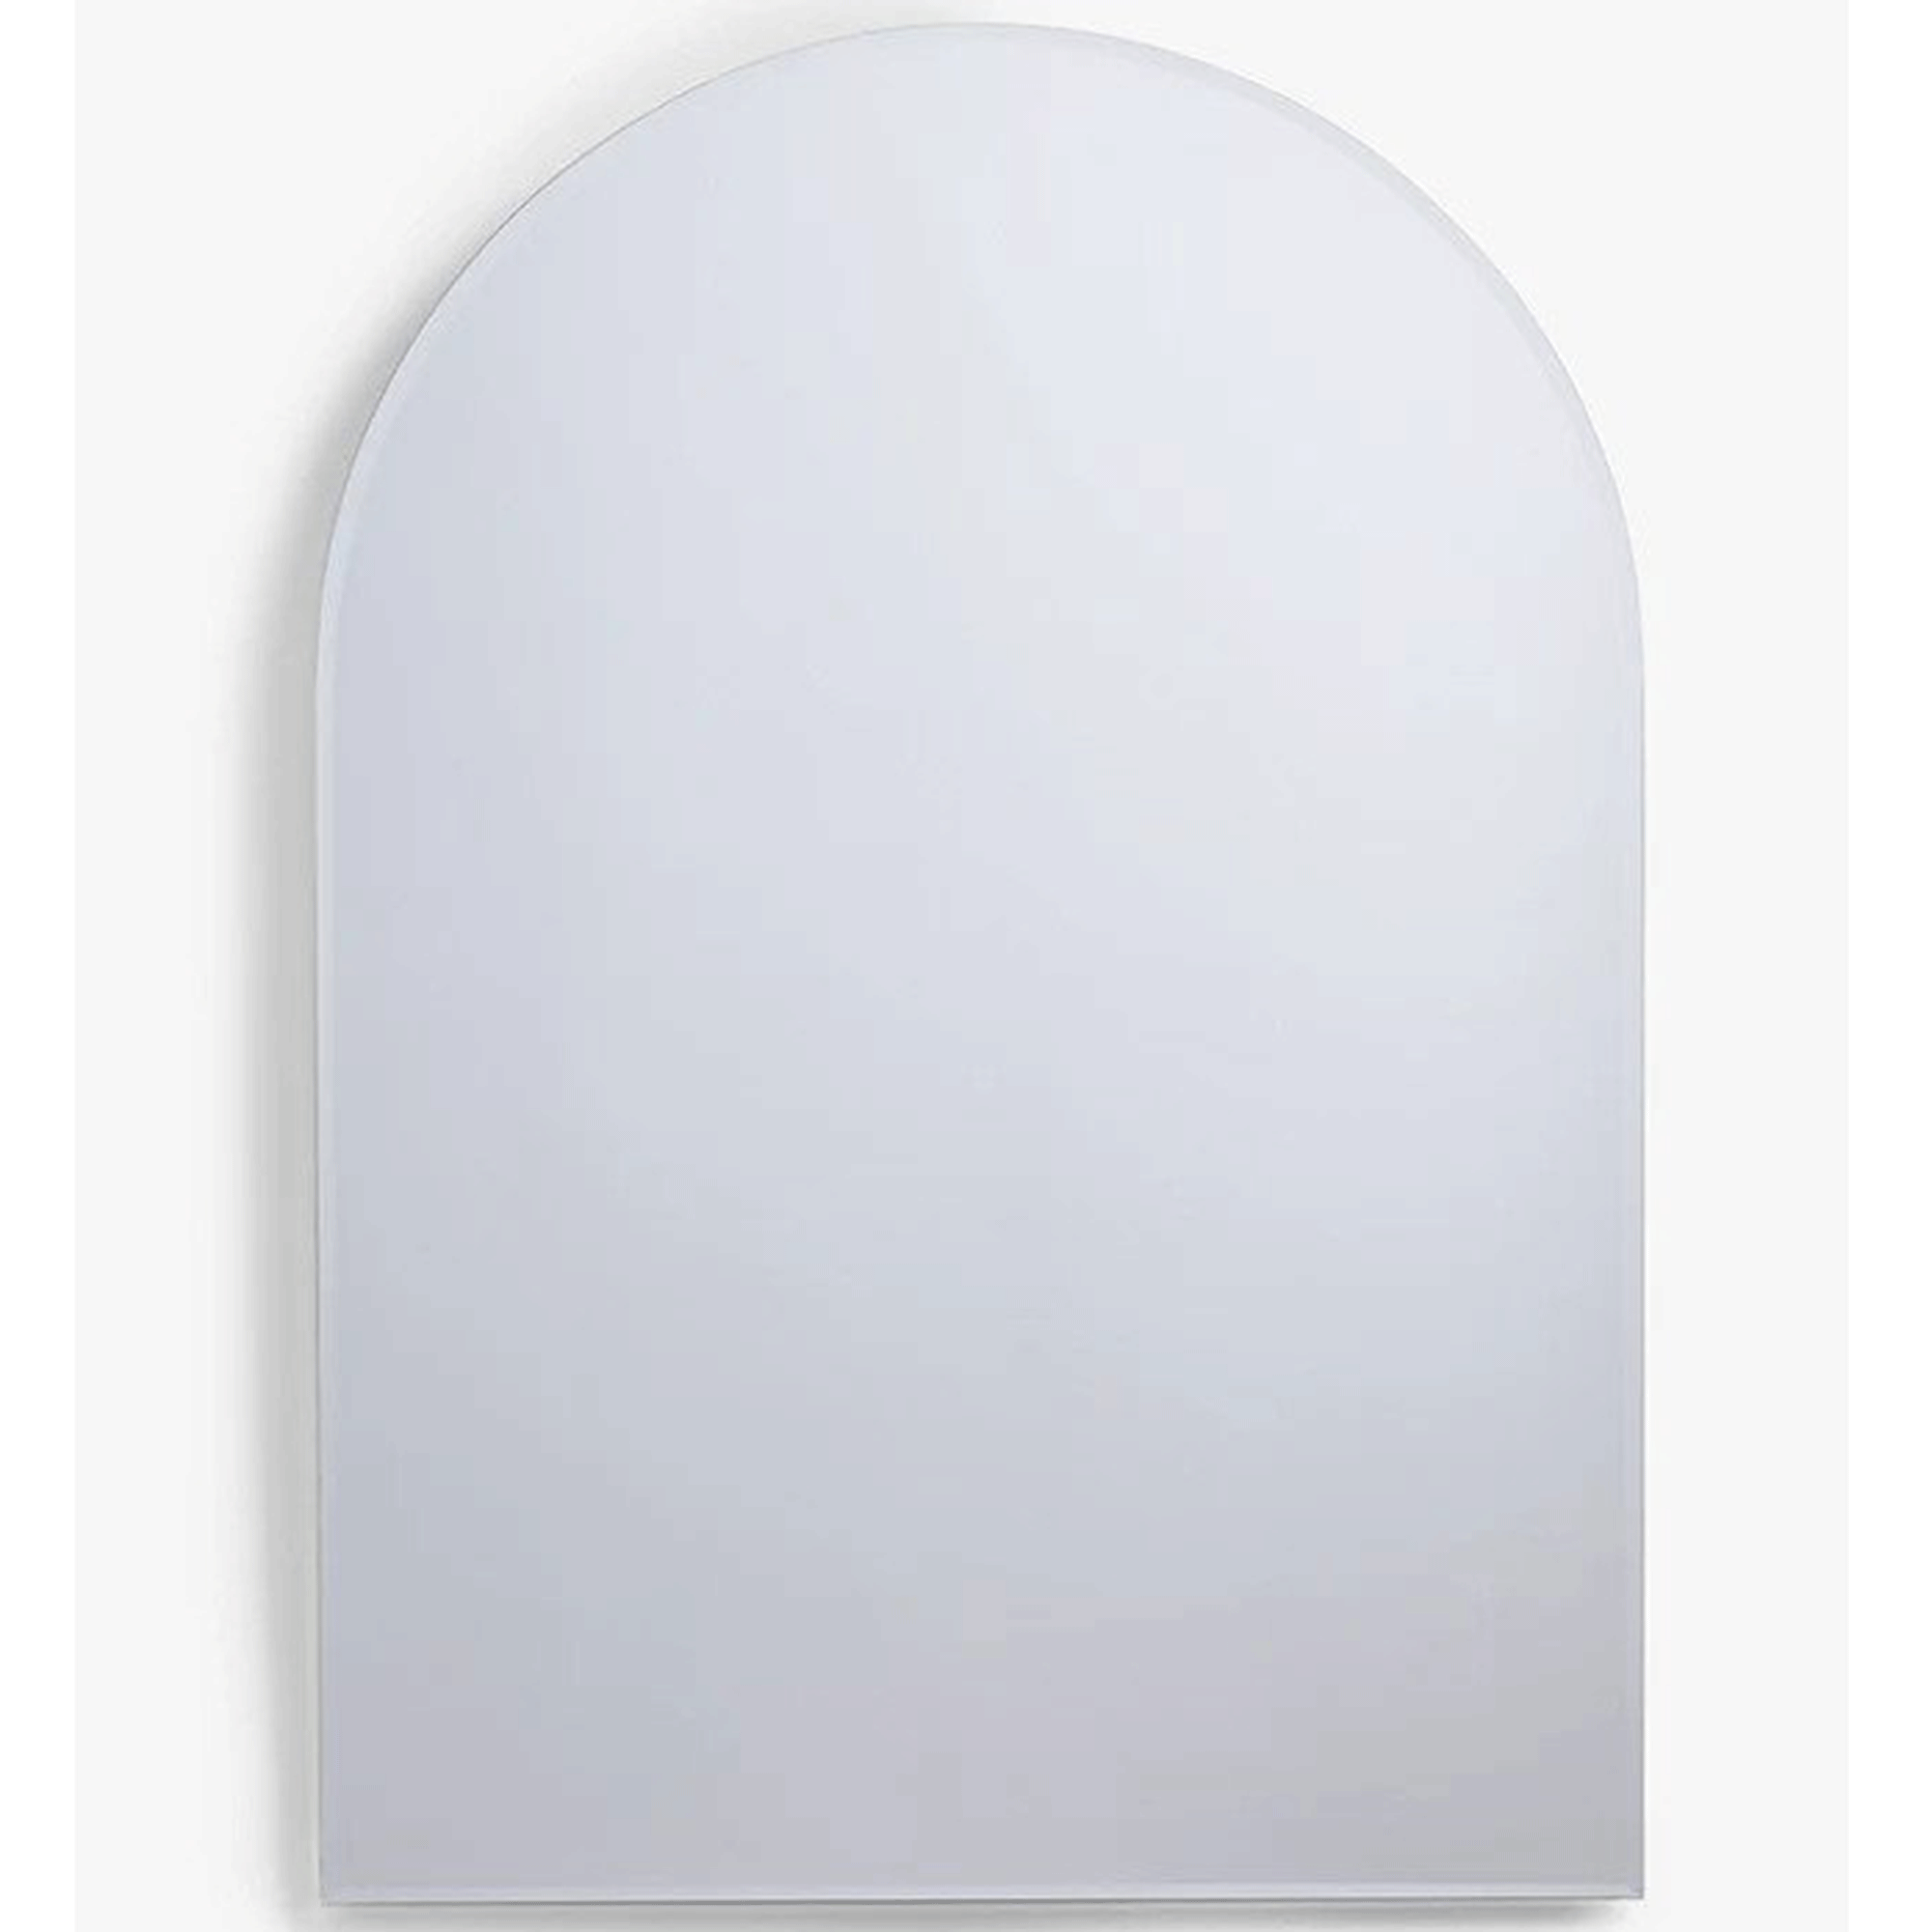 Frameless arch mirror